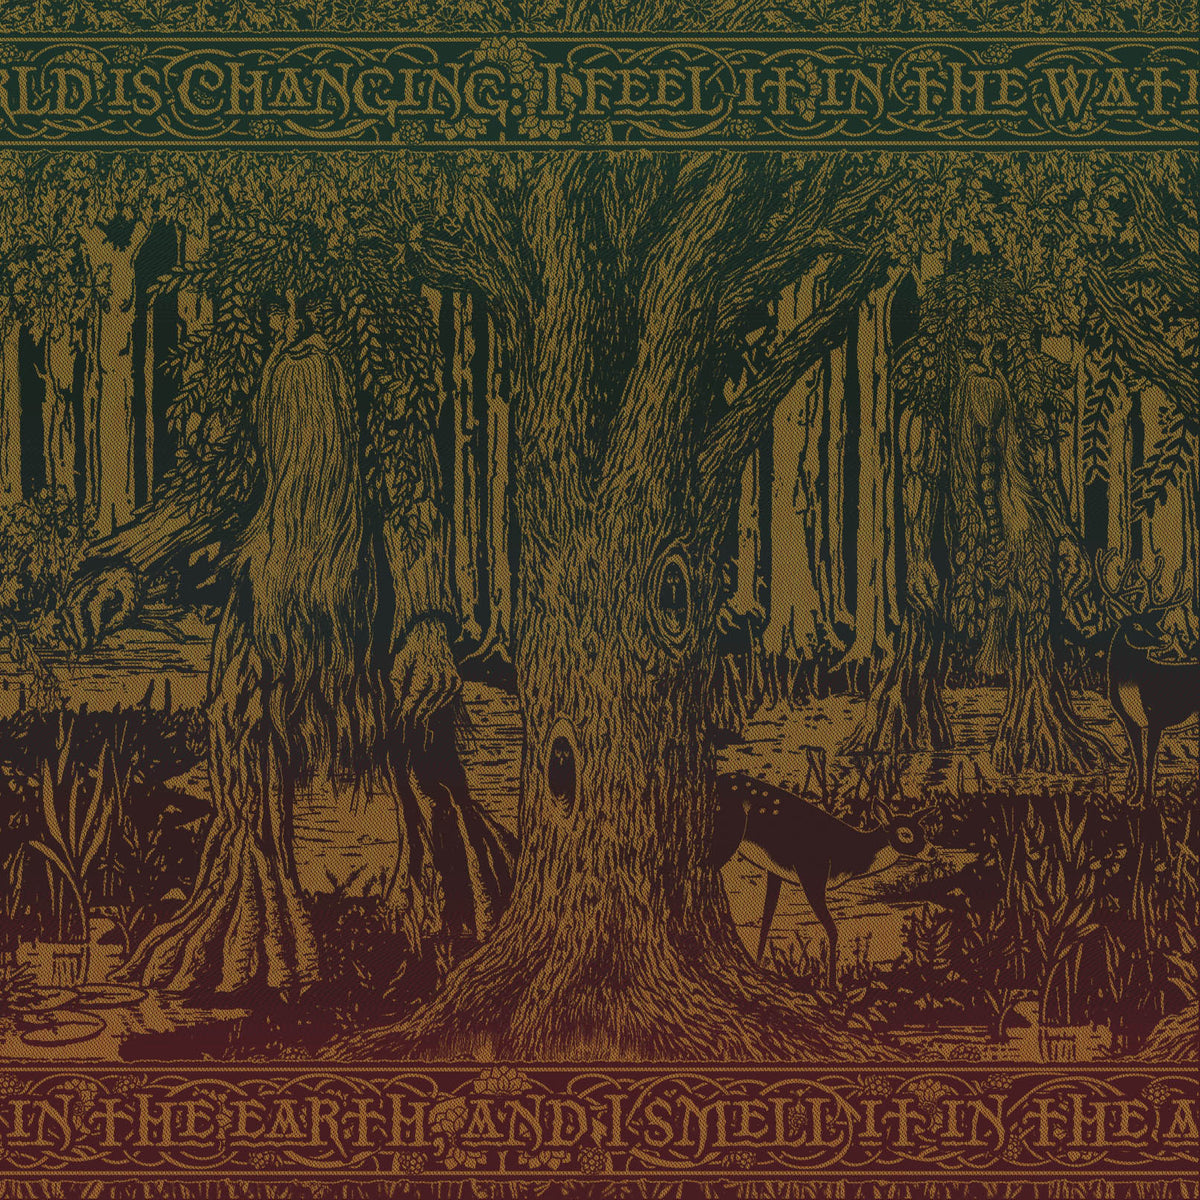 Treebeard Shepherd of the Forest Preorder